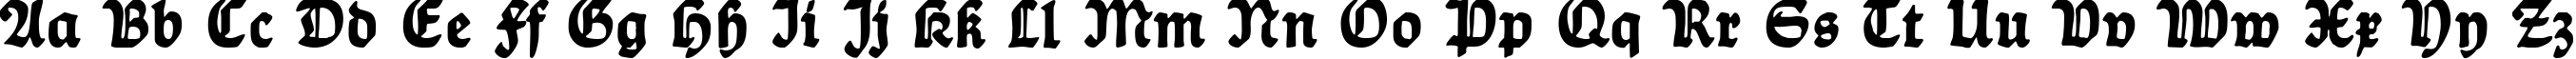 Пример написания английского алфавита шрифтом Ballade Bold